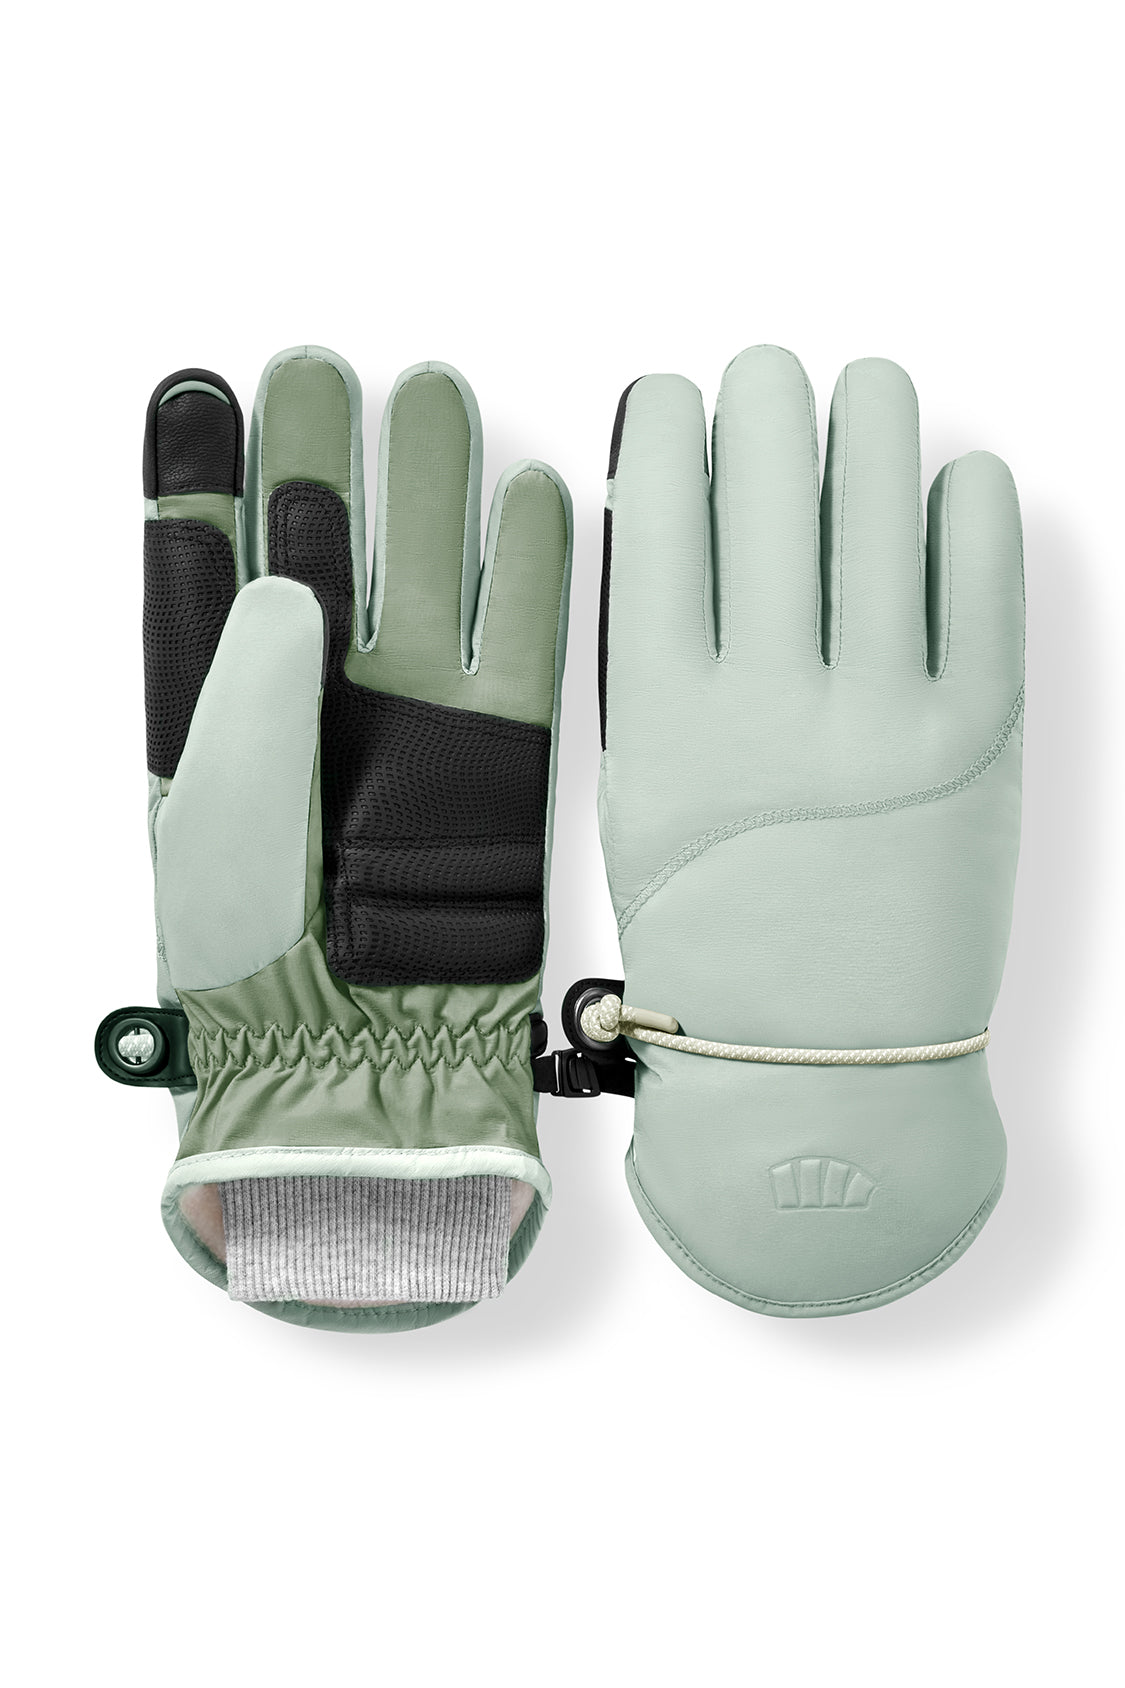 Women's Touch Screen Non-Slip Grip Winter Gloves with Fleece Lining LWG05-BK